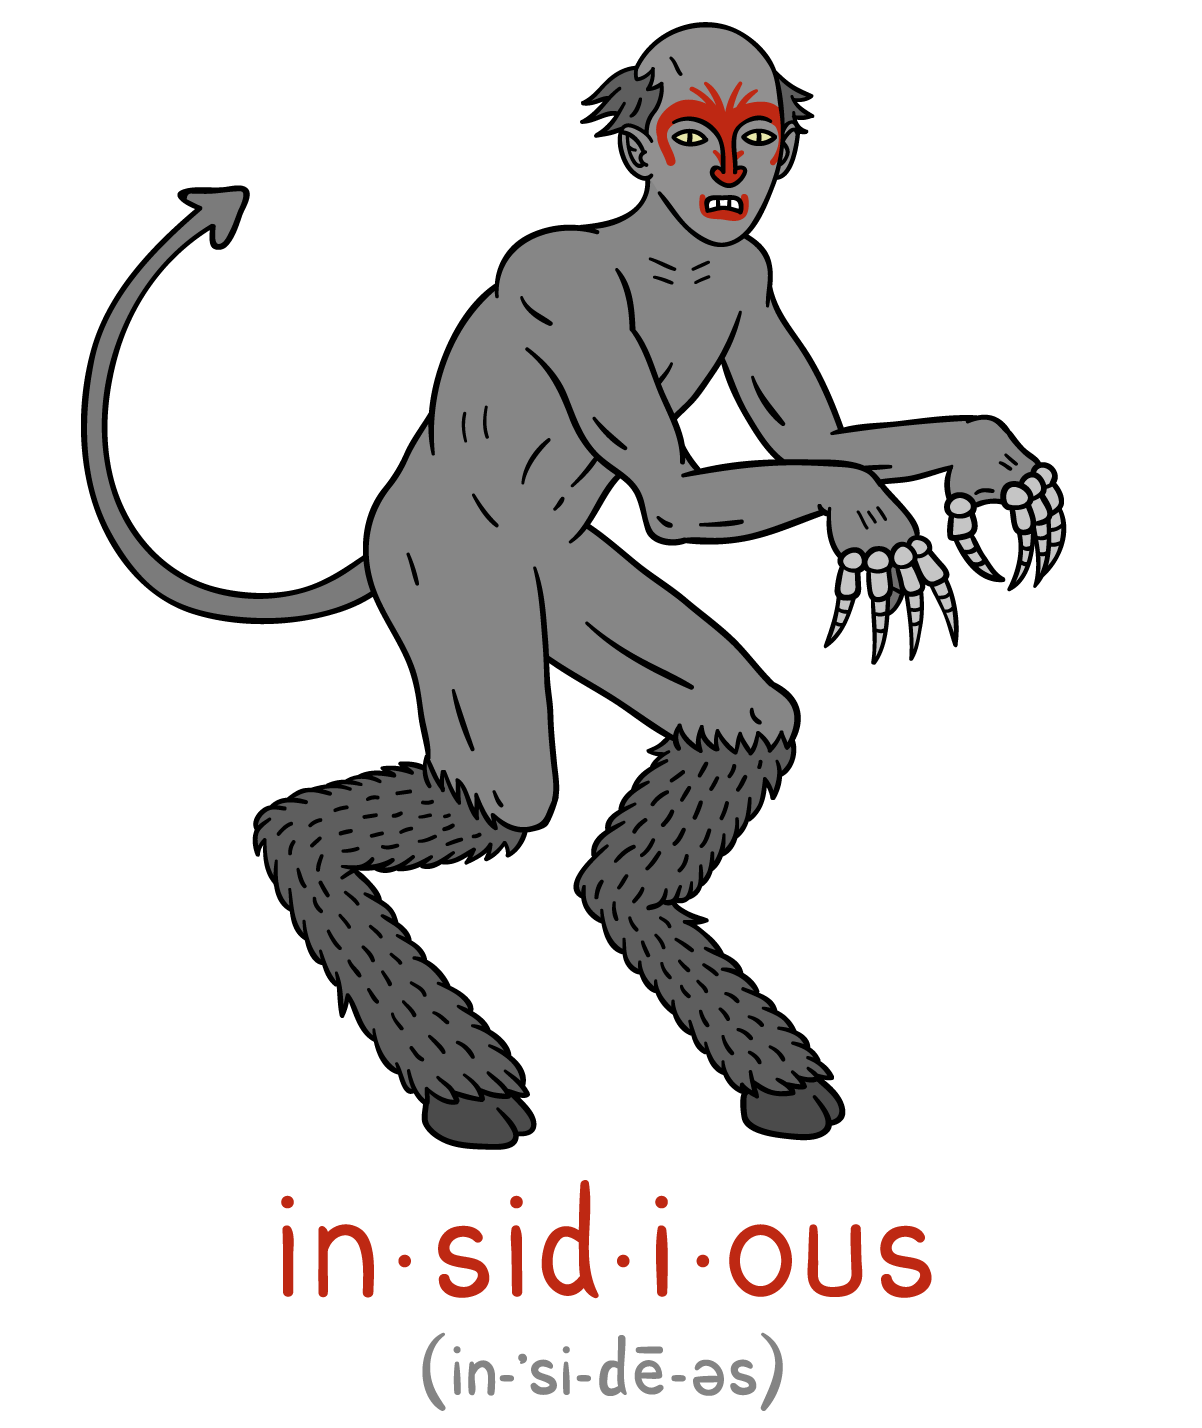 insidious-2010-demon